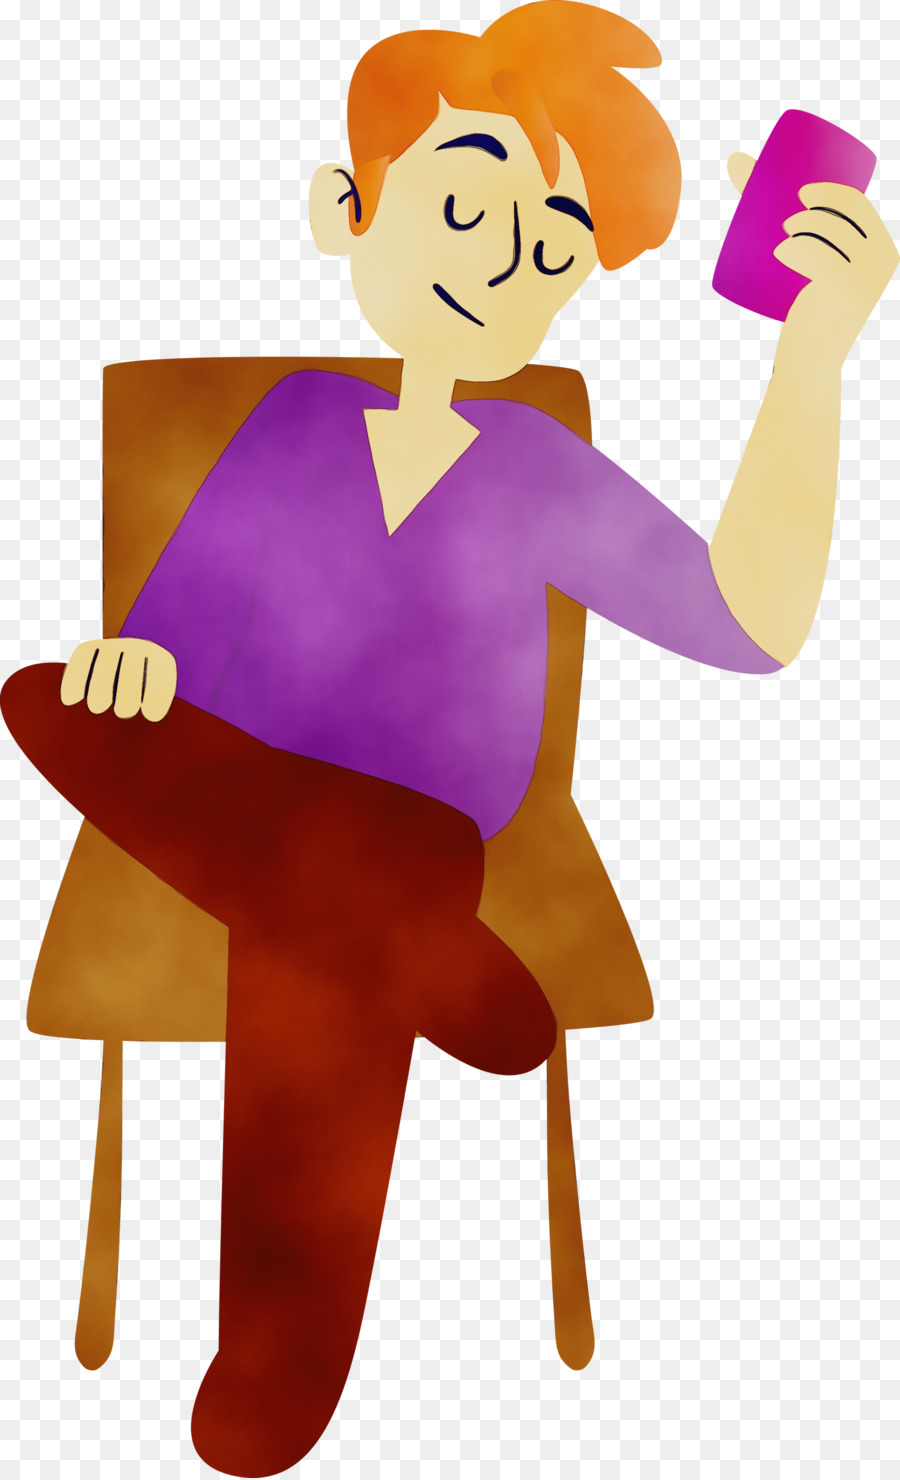 human character purple behavior character created by